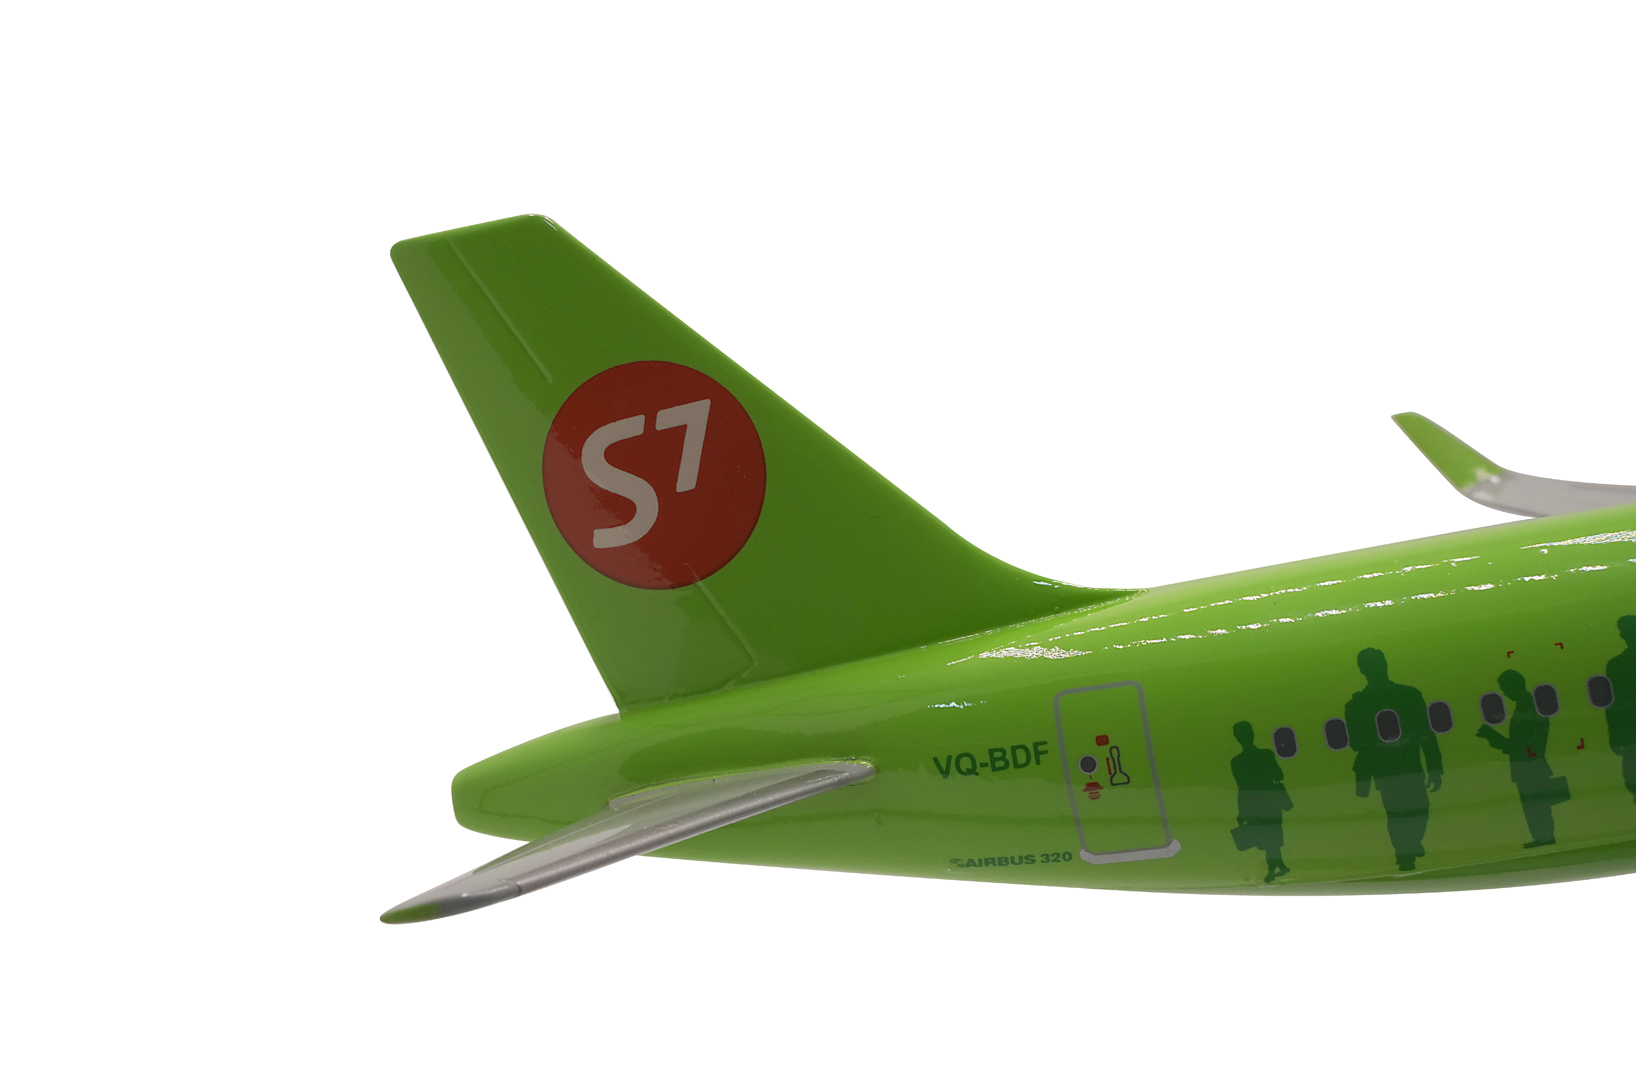    A-320   (S7 Airlines),  1:100,   37,5 . # 7 hobbyplus.ru